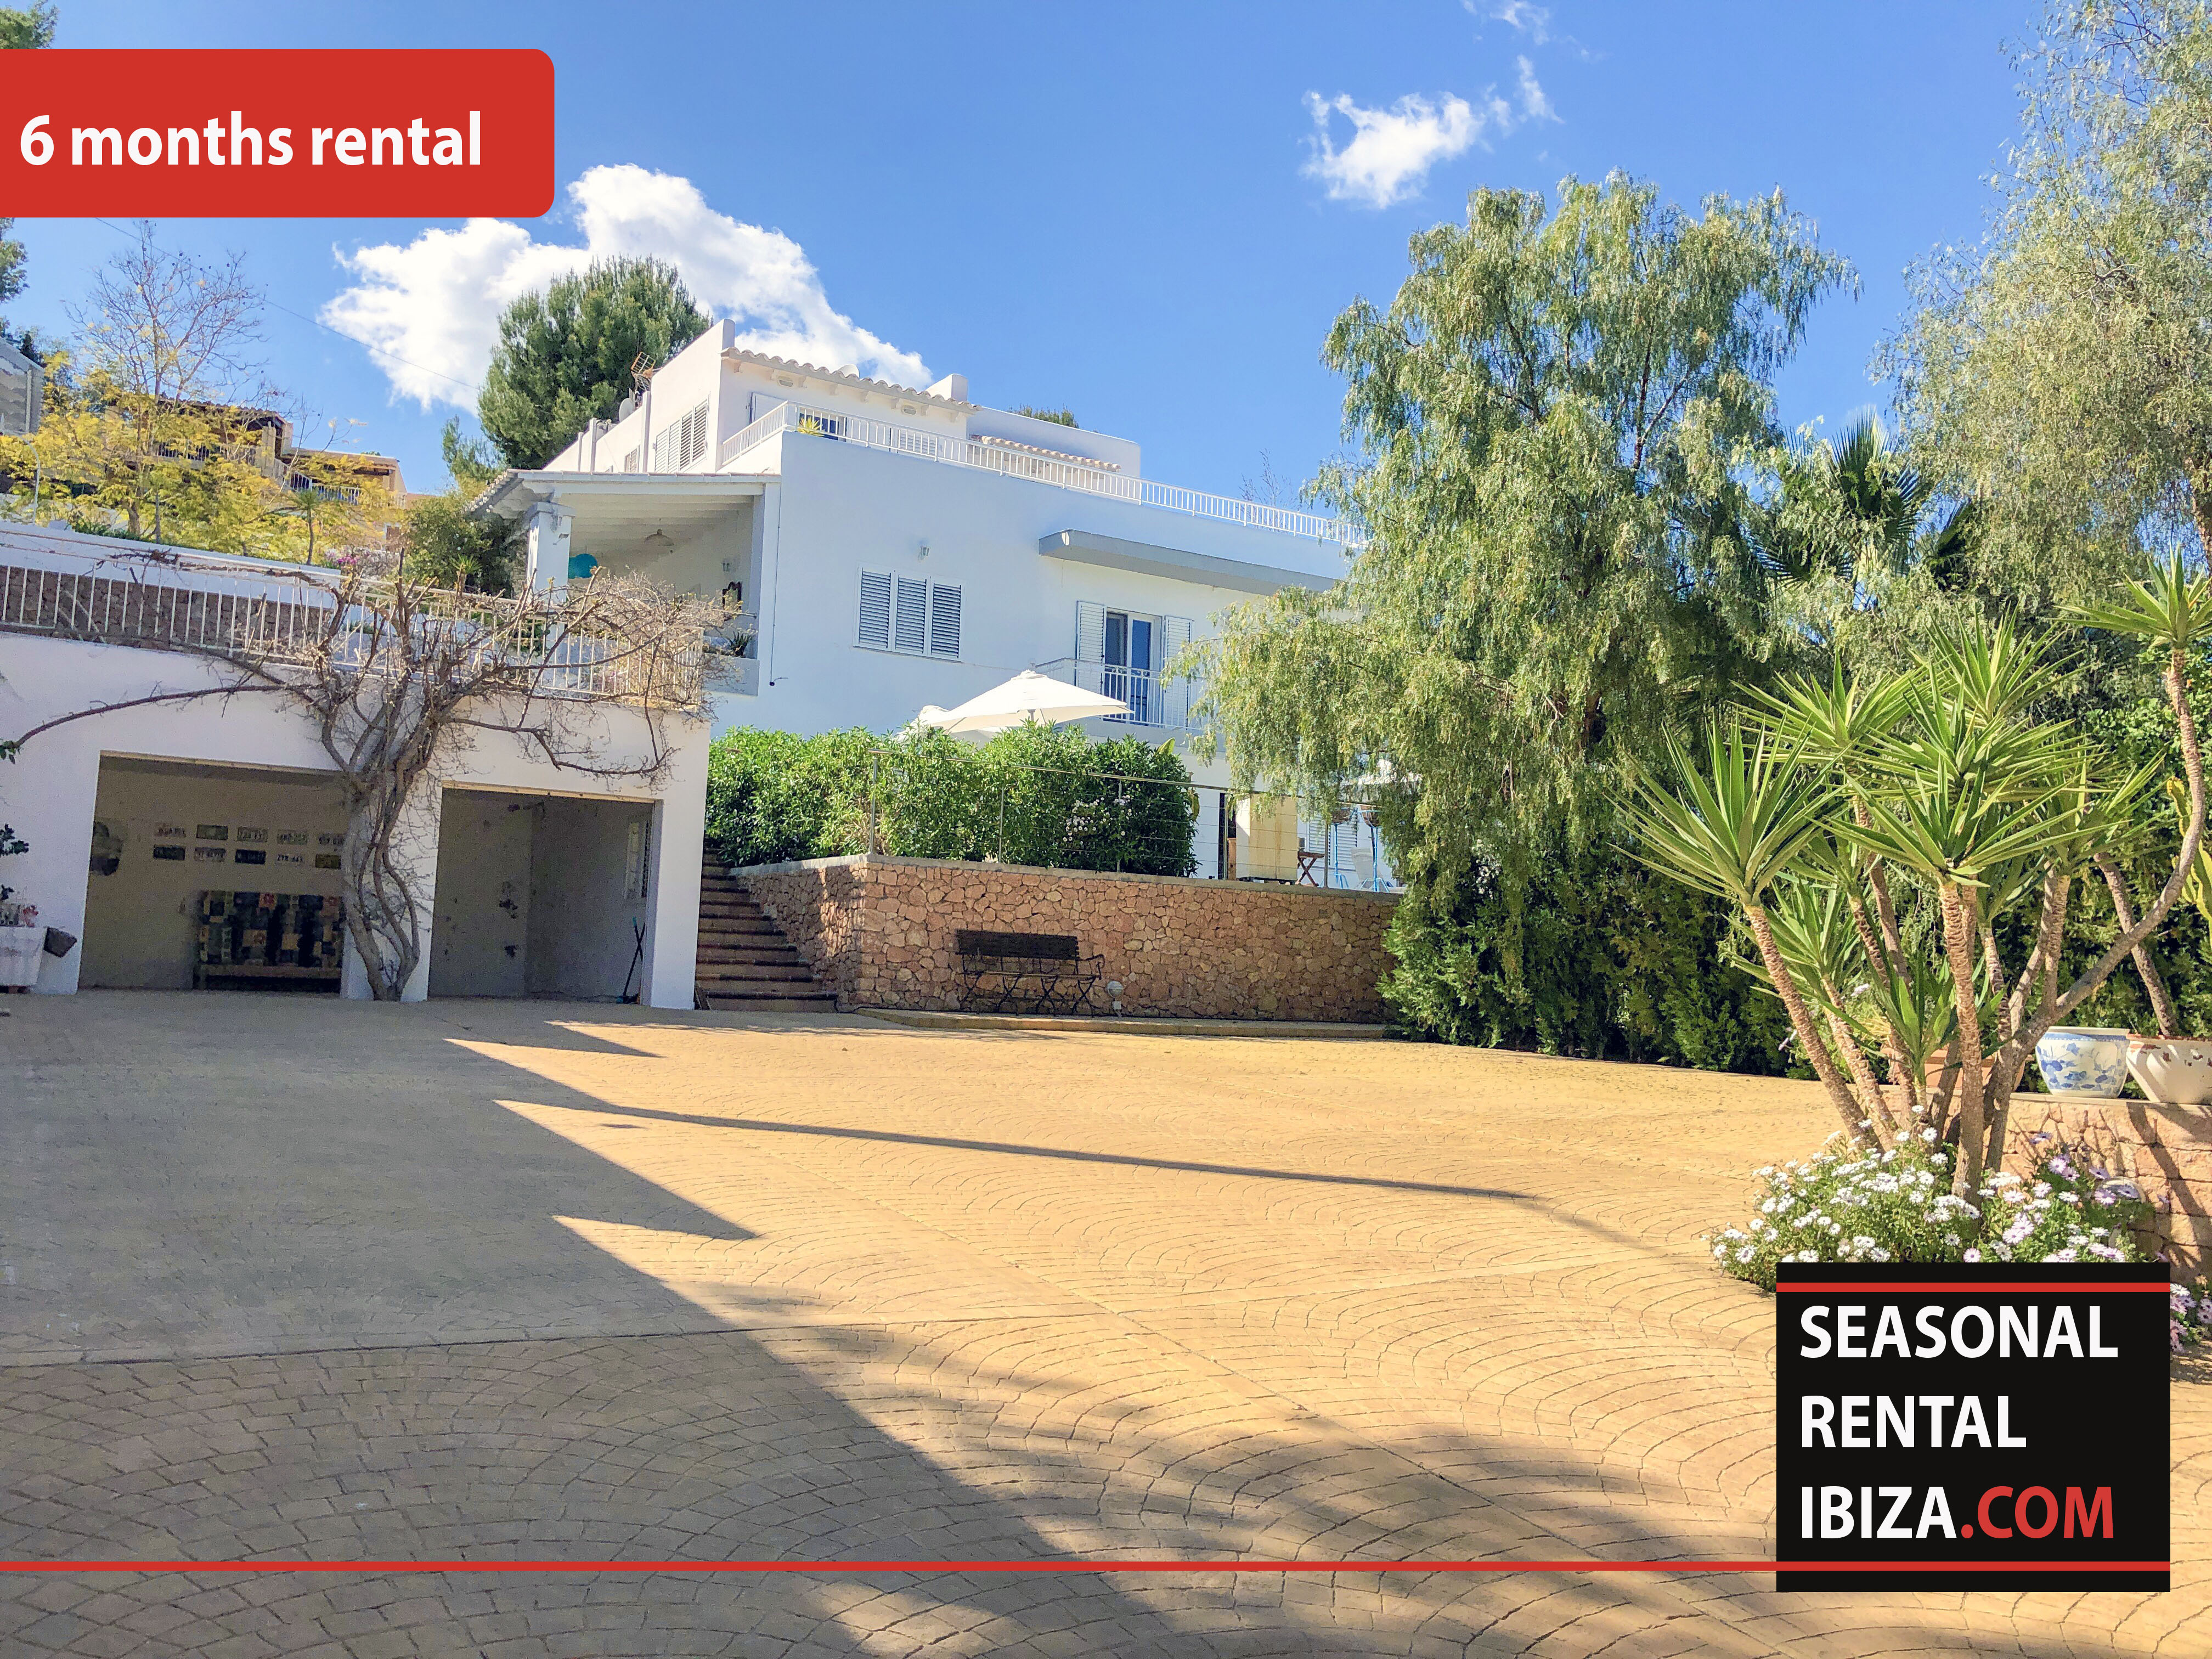 Seasonal rental Ibiza Villa Amnesia